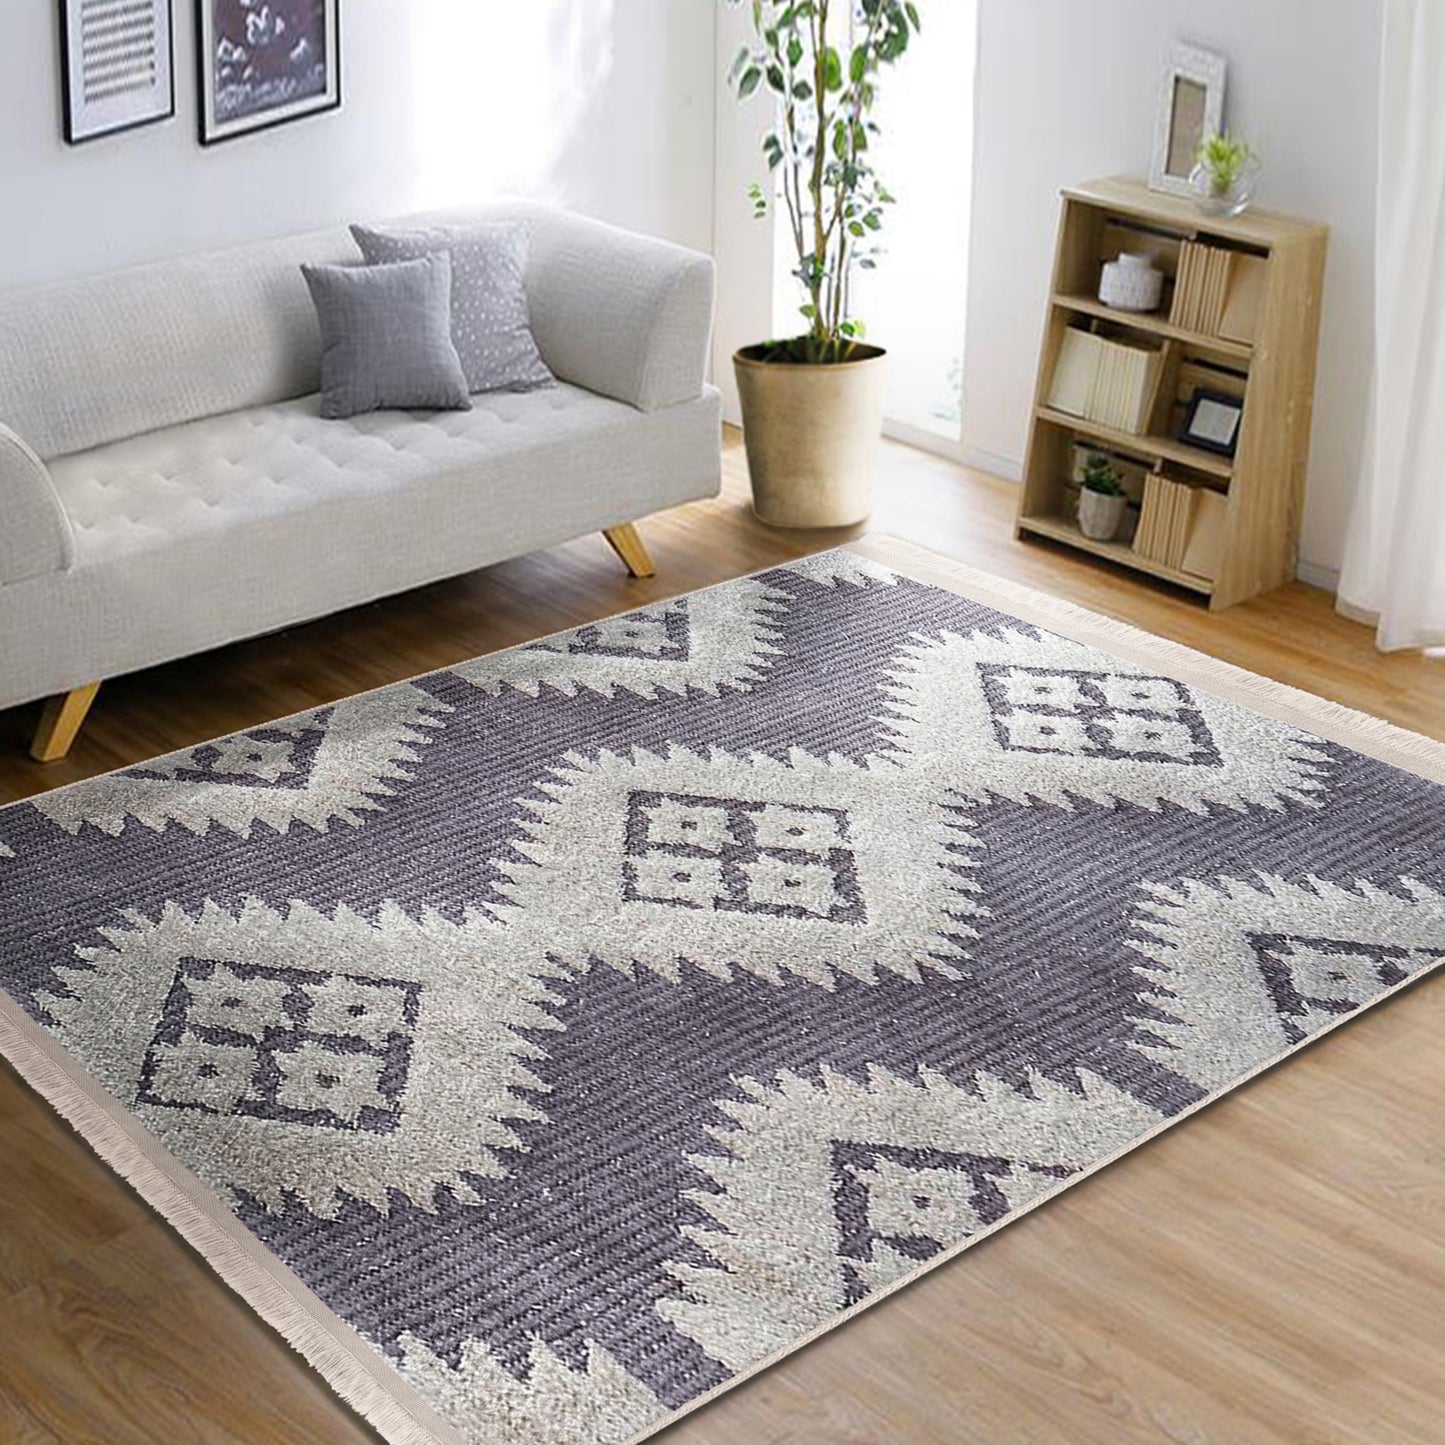 Classic Floor Comfort: Washable Rug by Homeezone